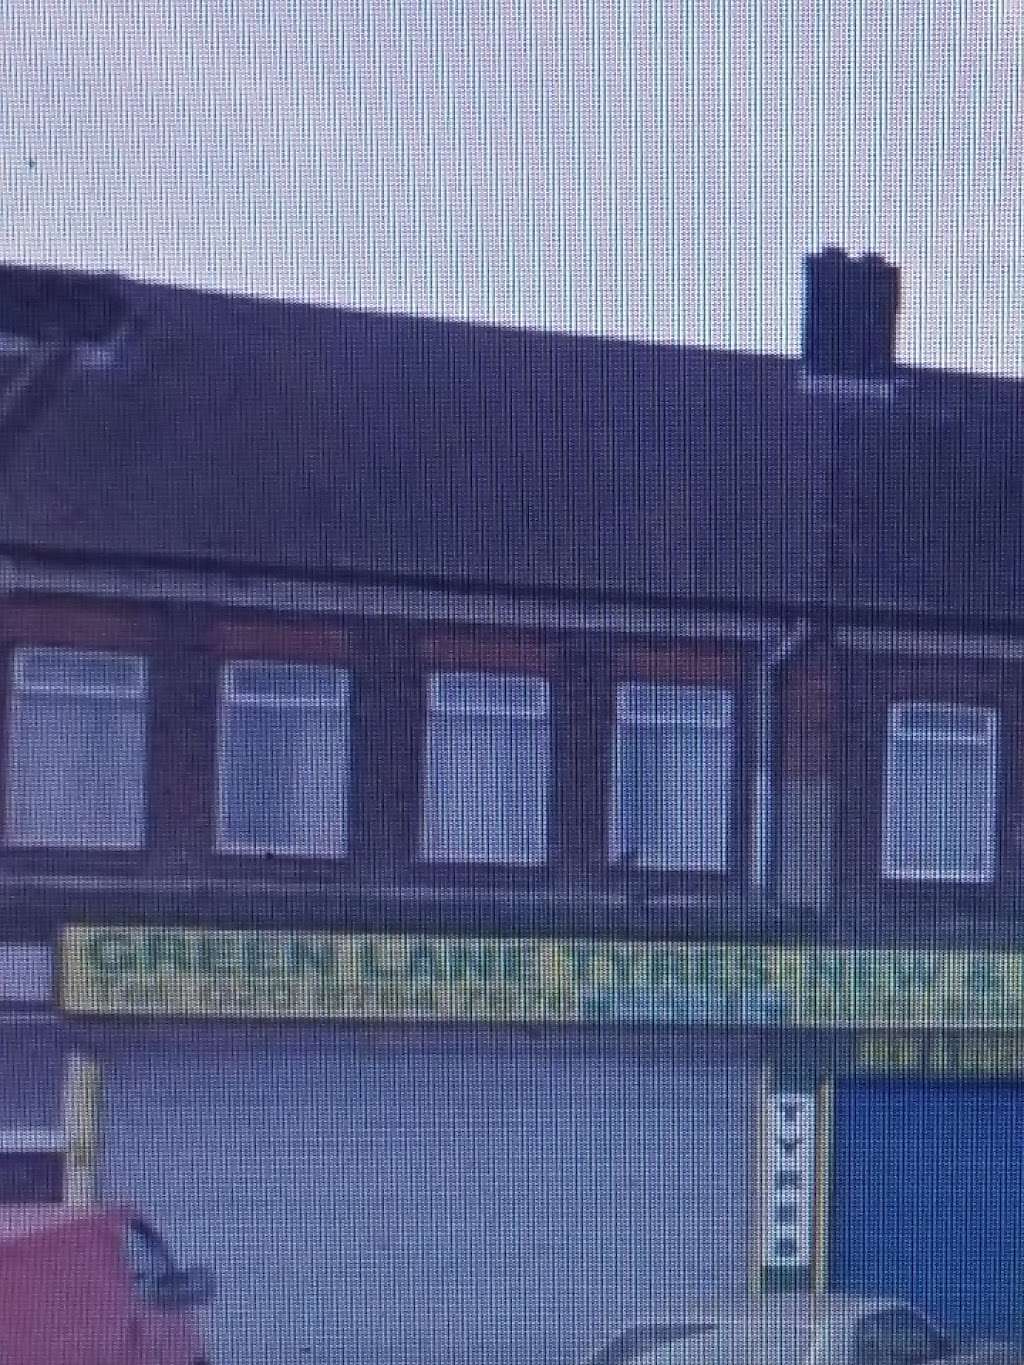 Green Lane Tyres | 32-34 Green Ln, Thornton Heath CR7 8BB, UK | Phone: 020 8764 7676